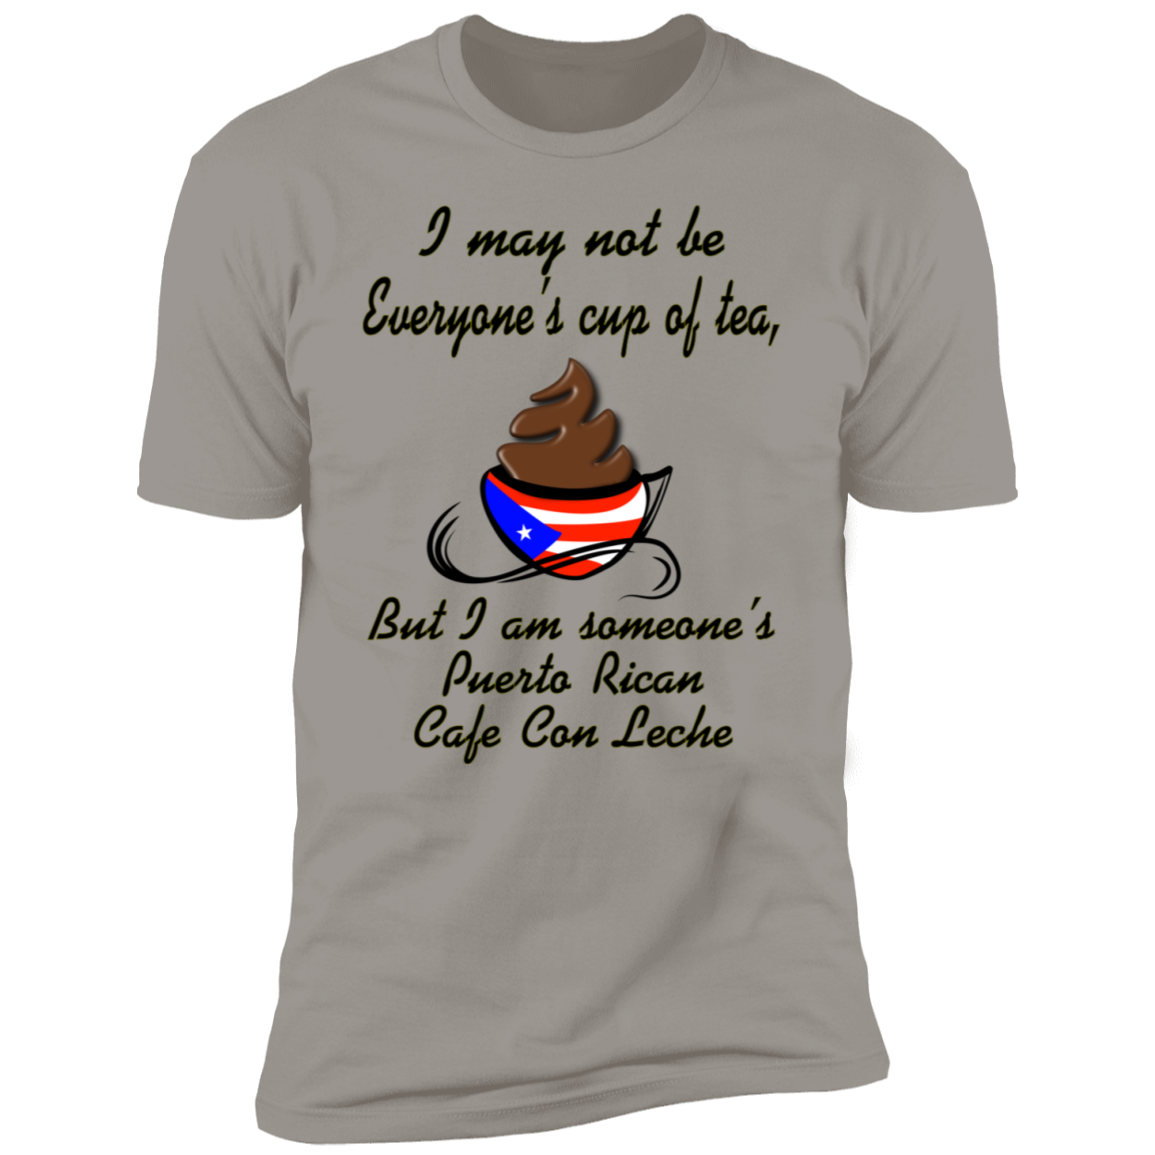 PR Cup of Tea Premium Short Sleeve T-Shirt - Puerto Rican Pride